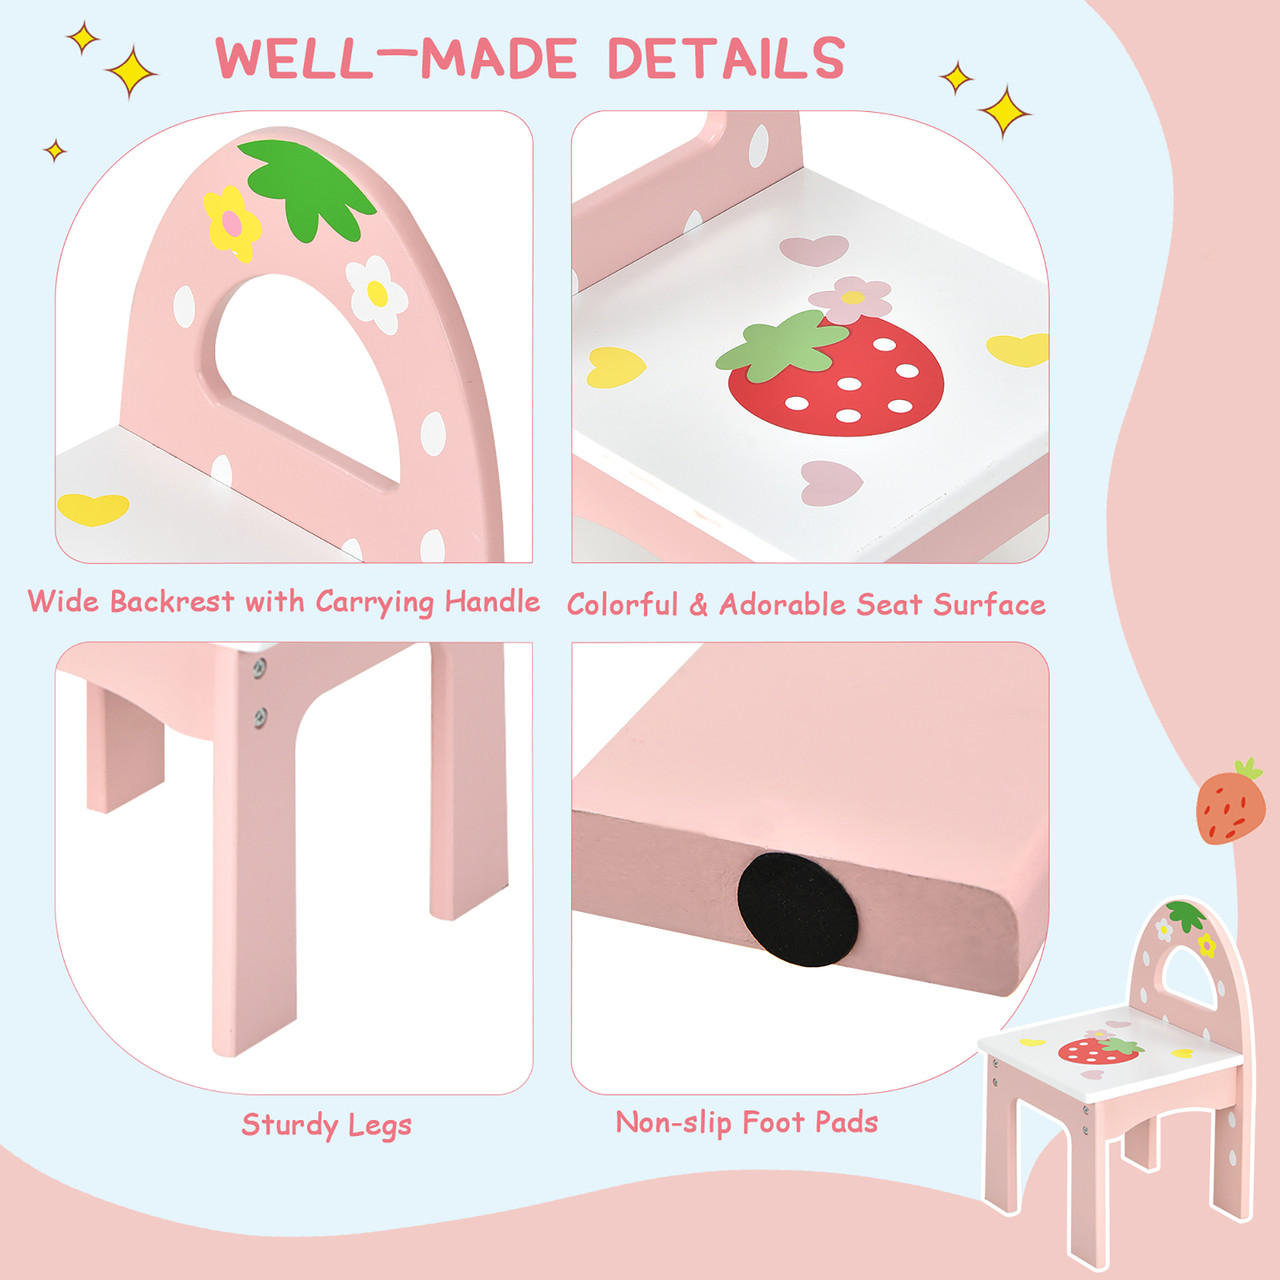 Kids' Princess Vanity Makeup Dressing Table Set product image